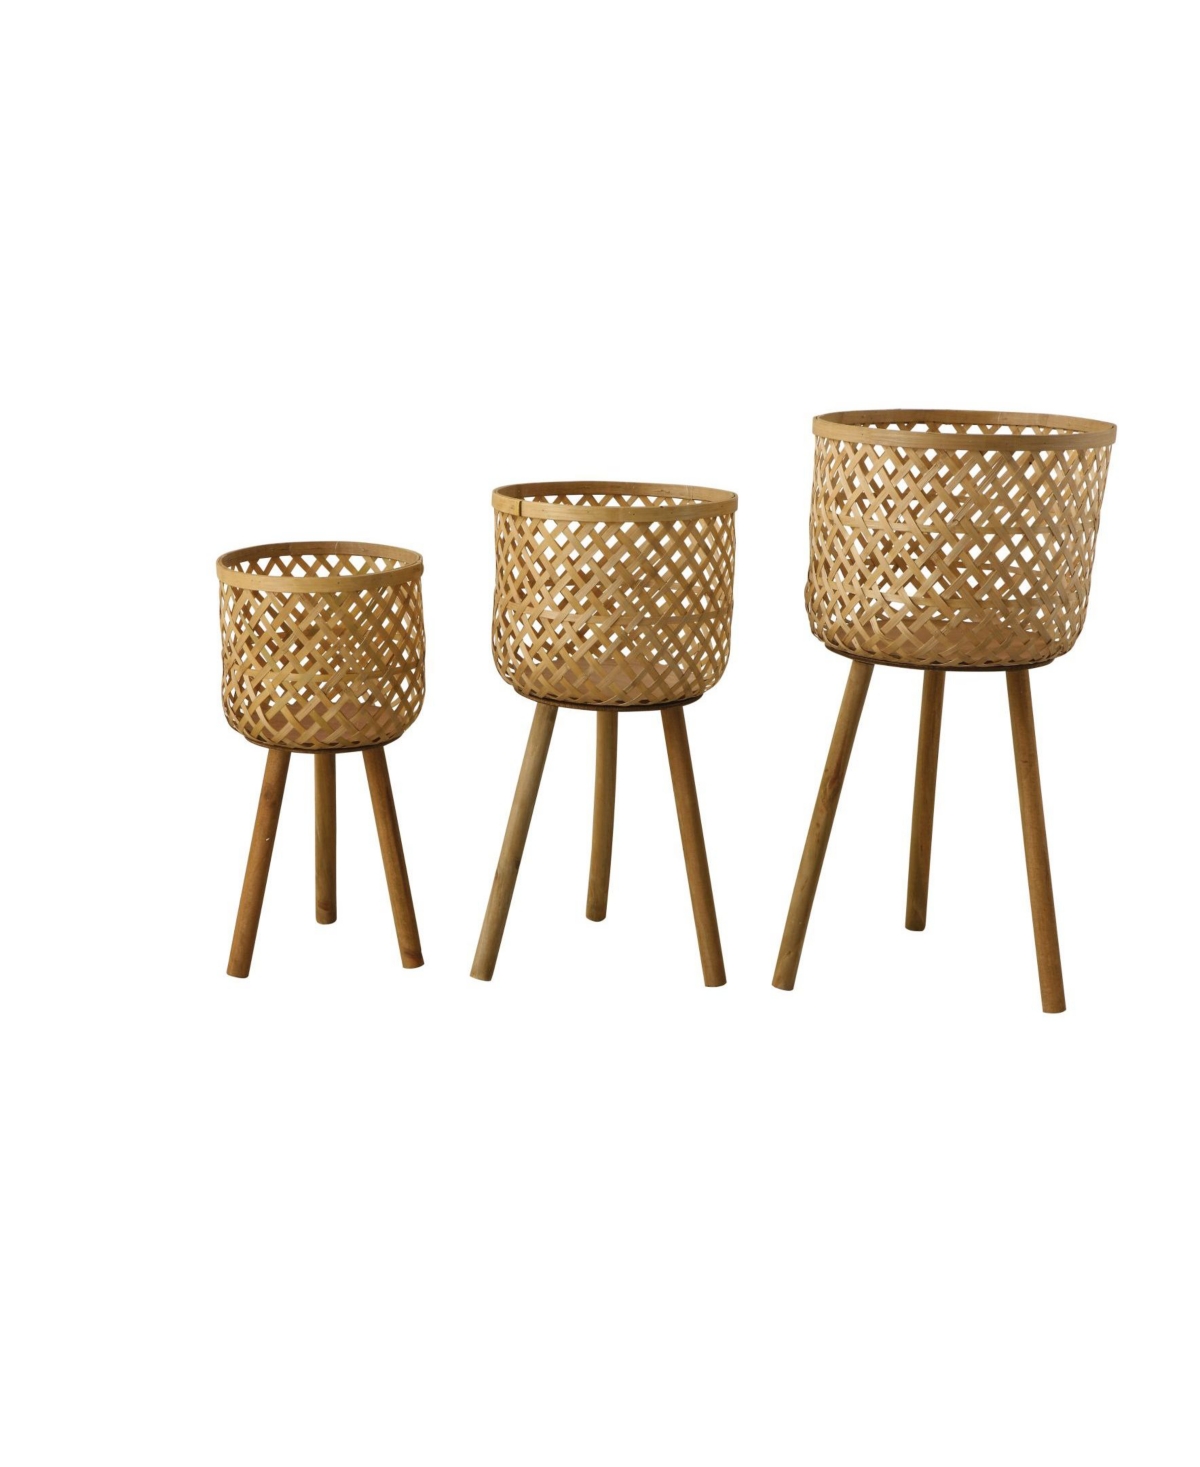 8047585 Round Bamboo Floor Baskets w/ Wood Legs, Set of 3 sku 8047585